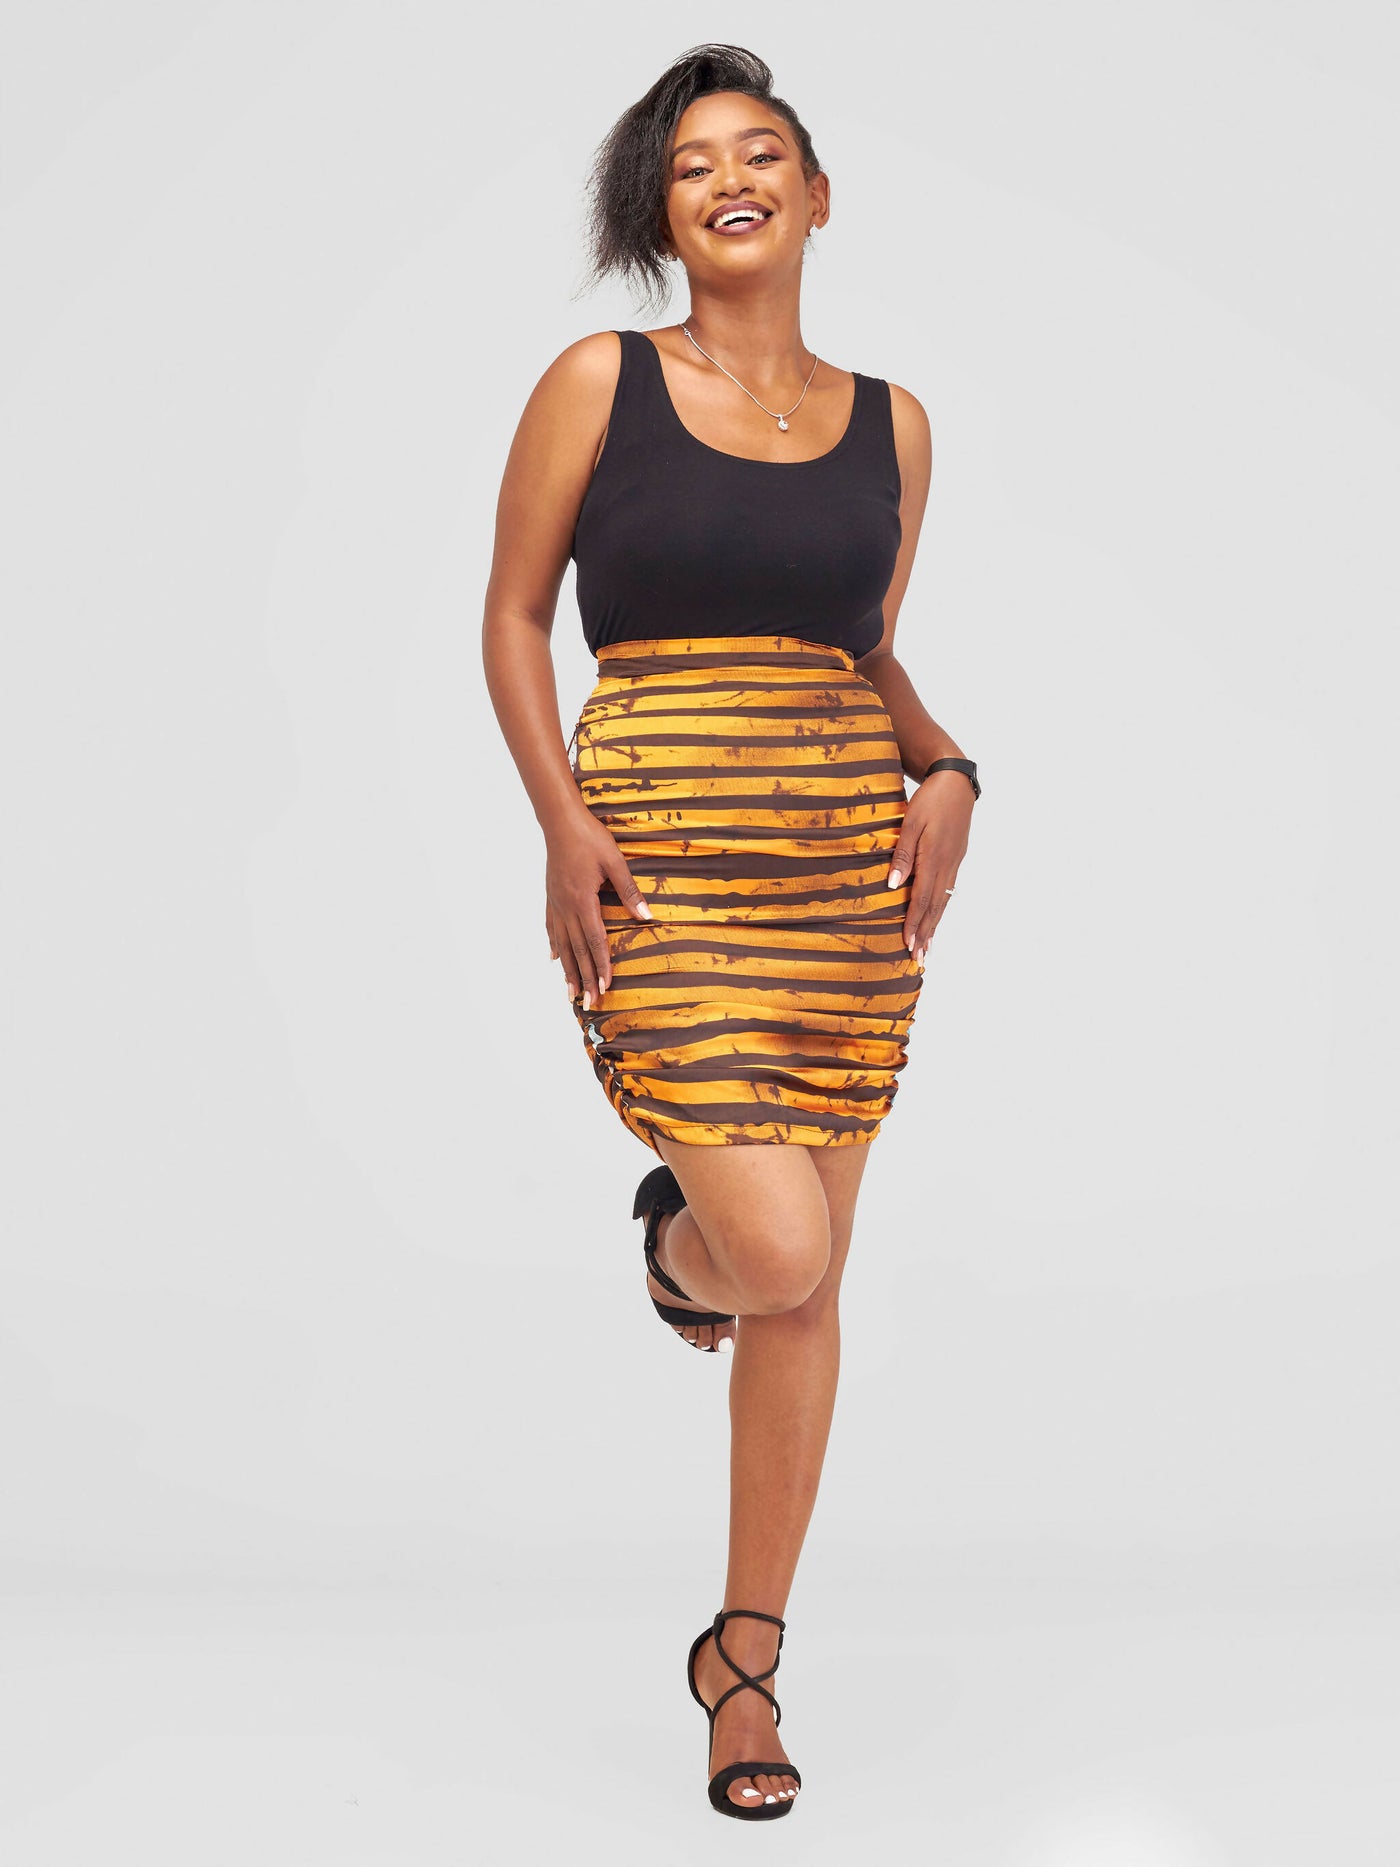 Nefpatra Africa Adire Summer Skirt - Brown